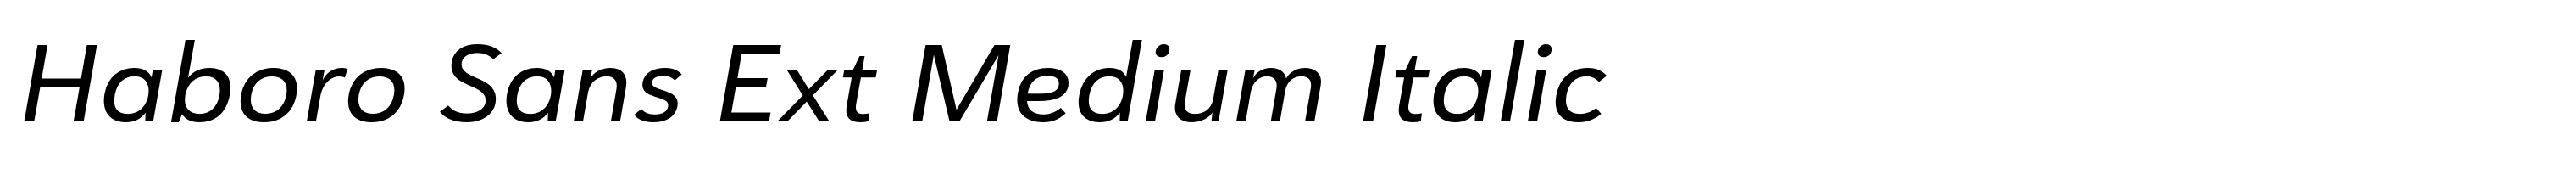 Haboro Sans Ext Medium Italic